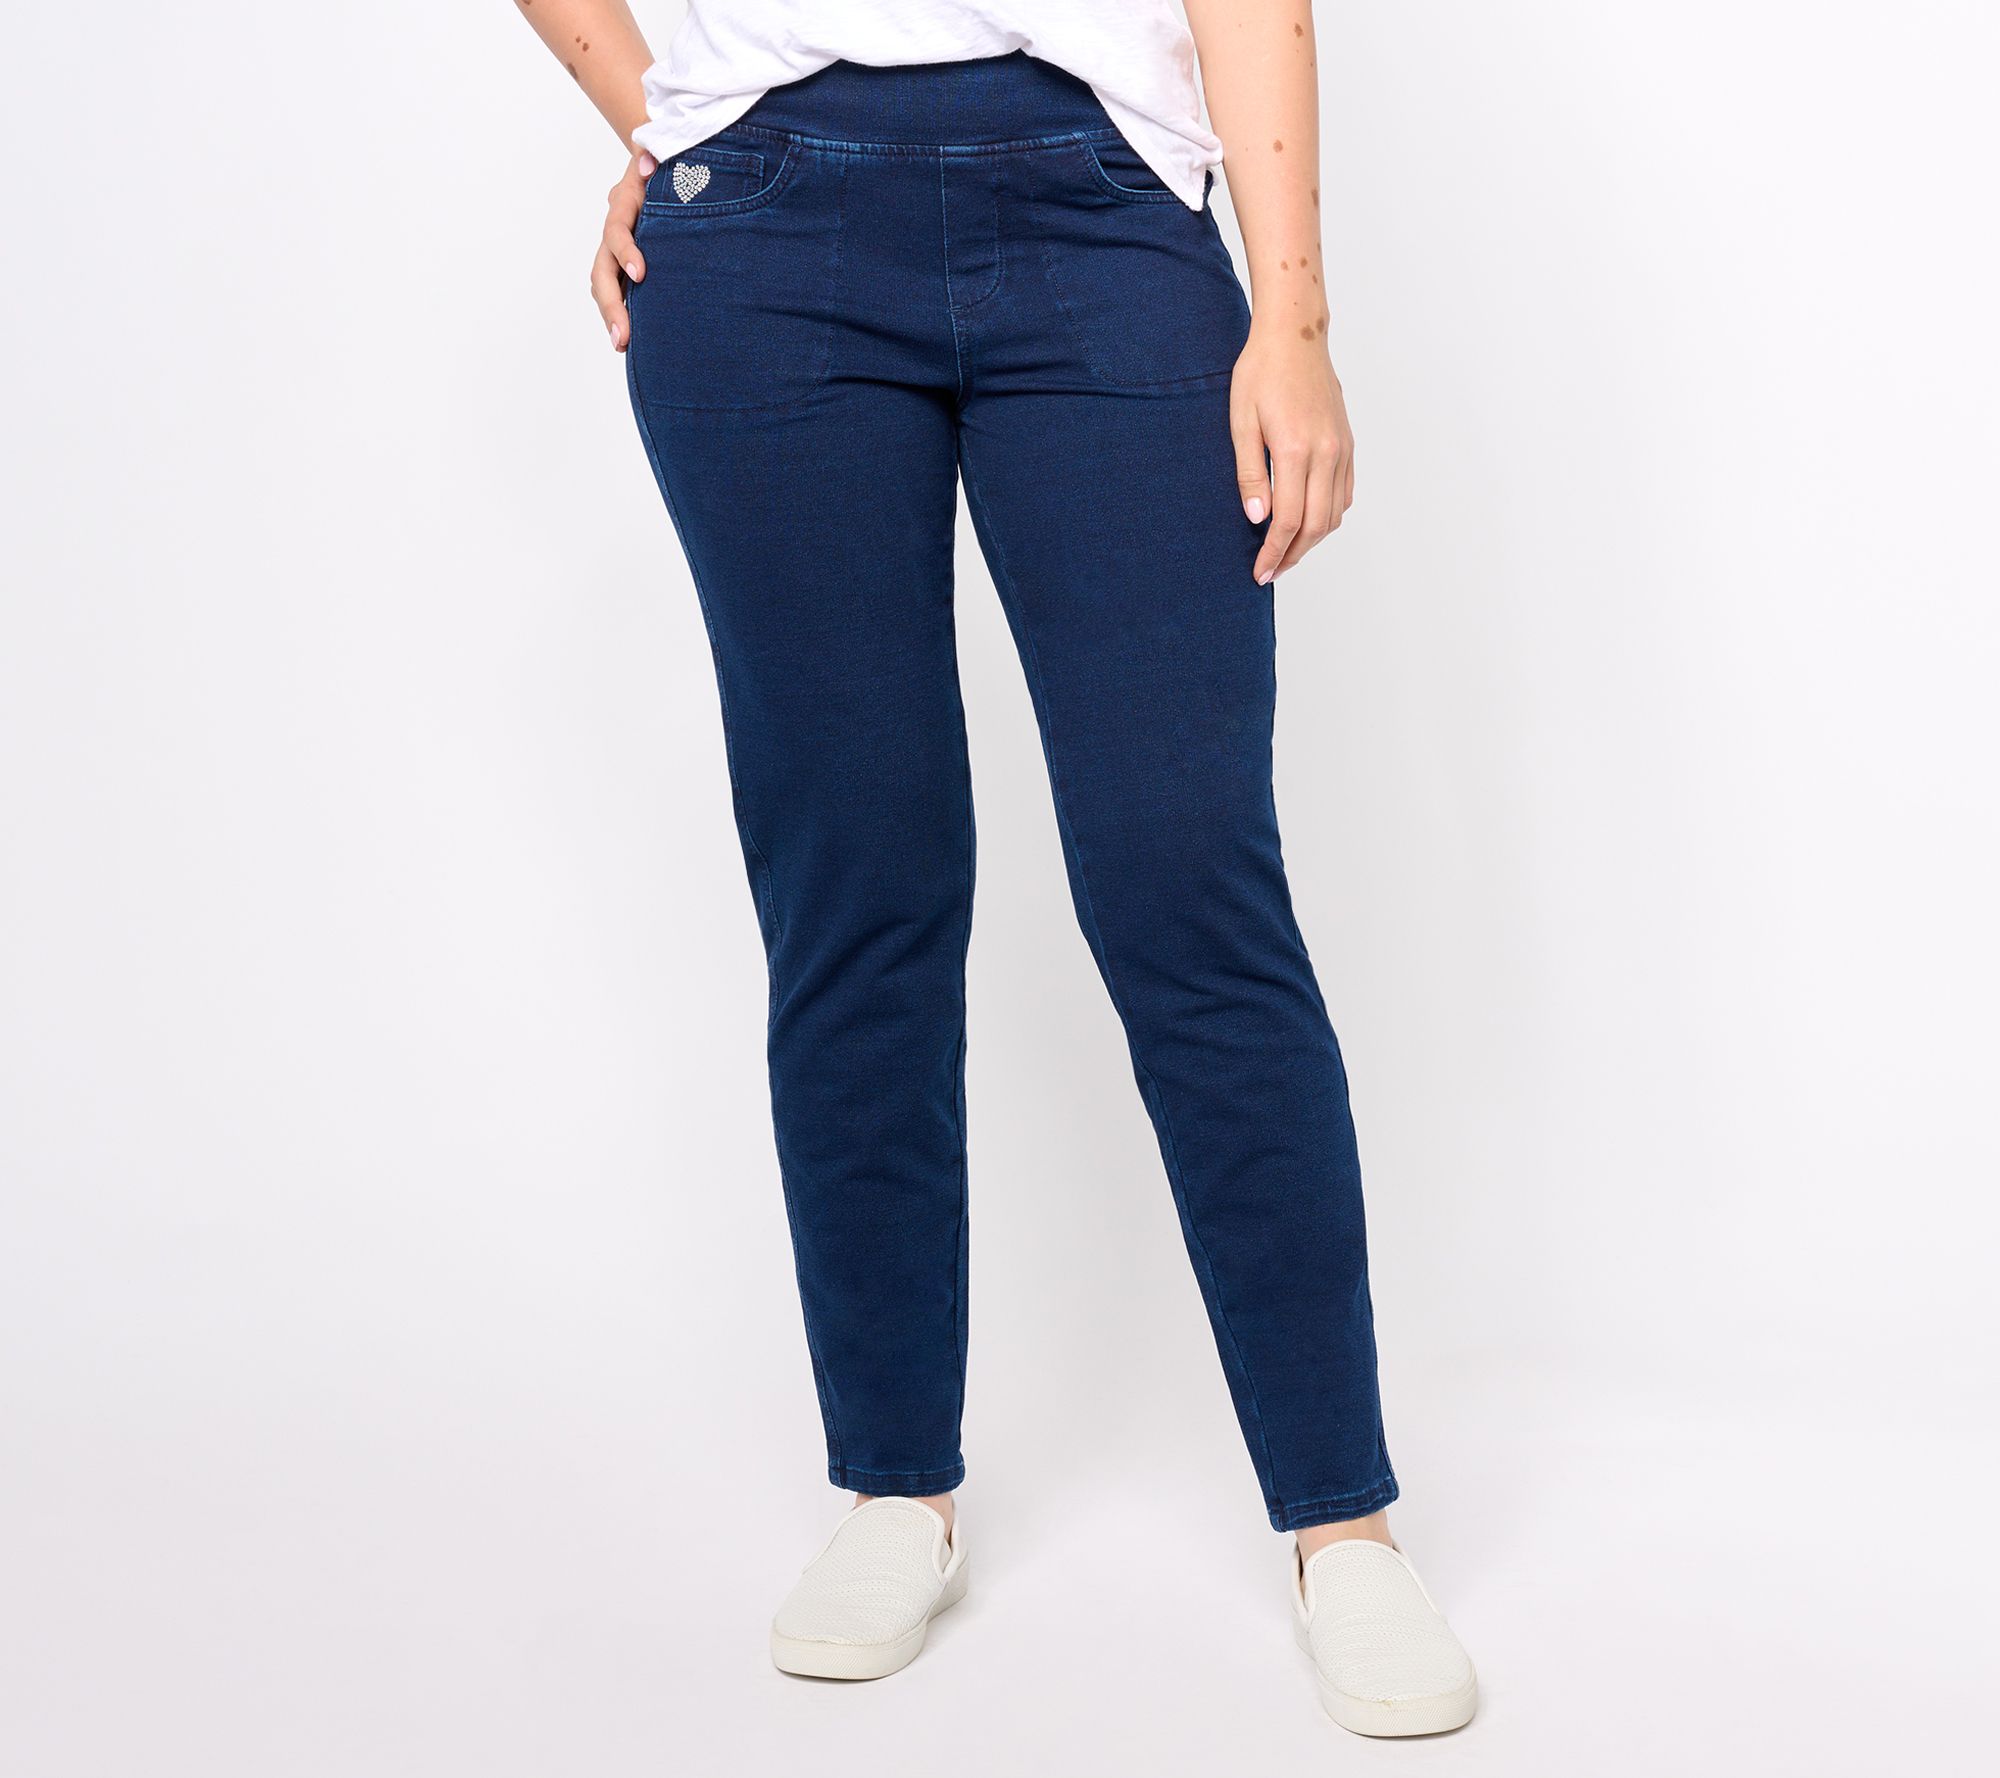 Jeans - Full-Length Pants 